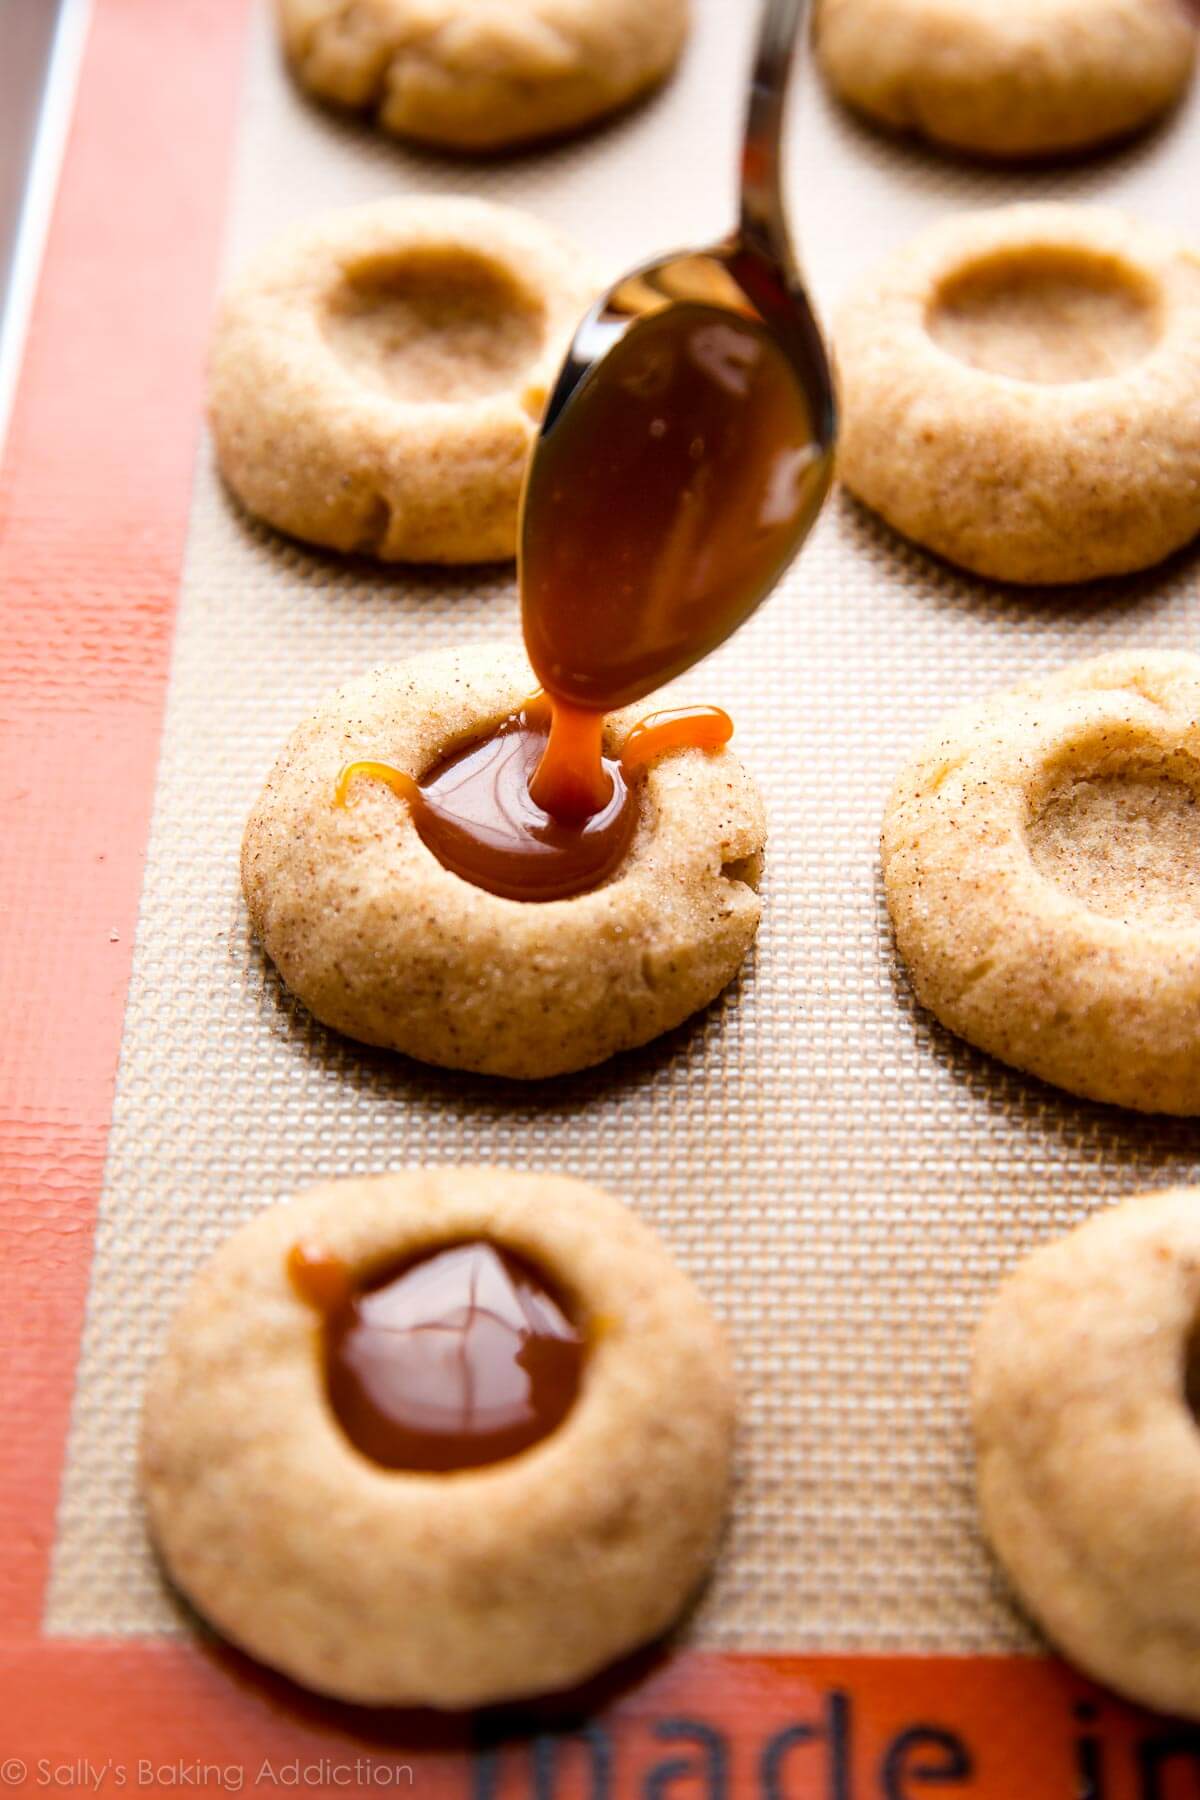 spooning caramel filling into thumbprint cookies